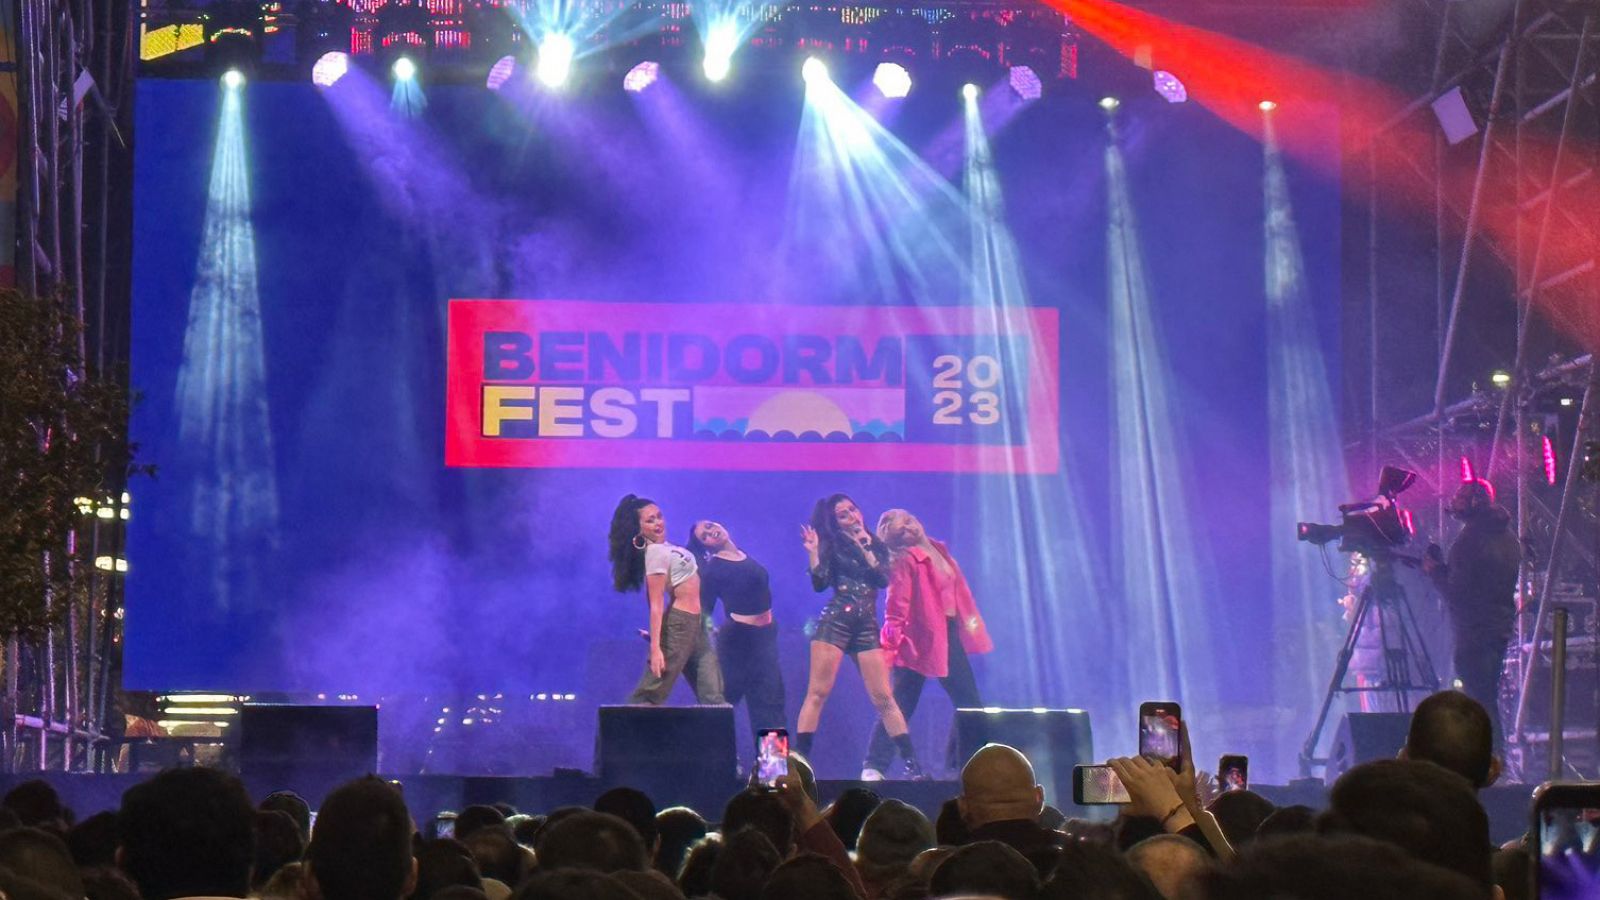 Benidorm Fest - Euroclub: Tercer concierto